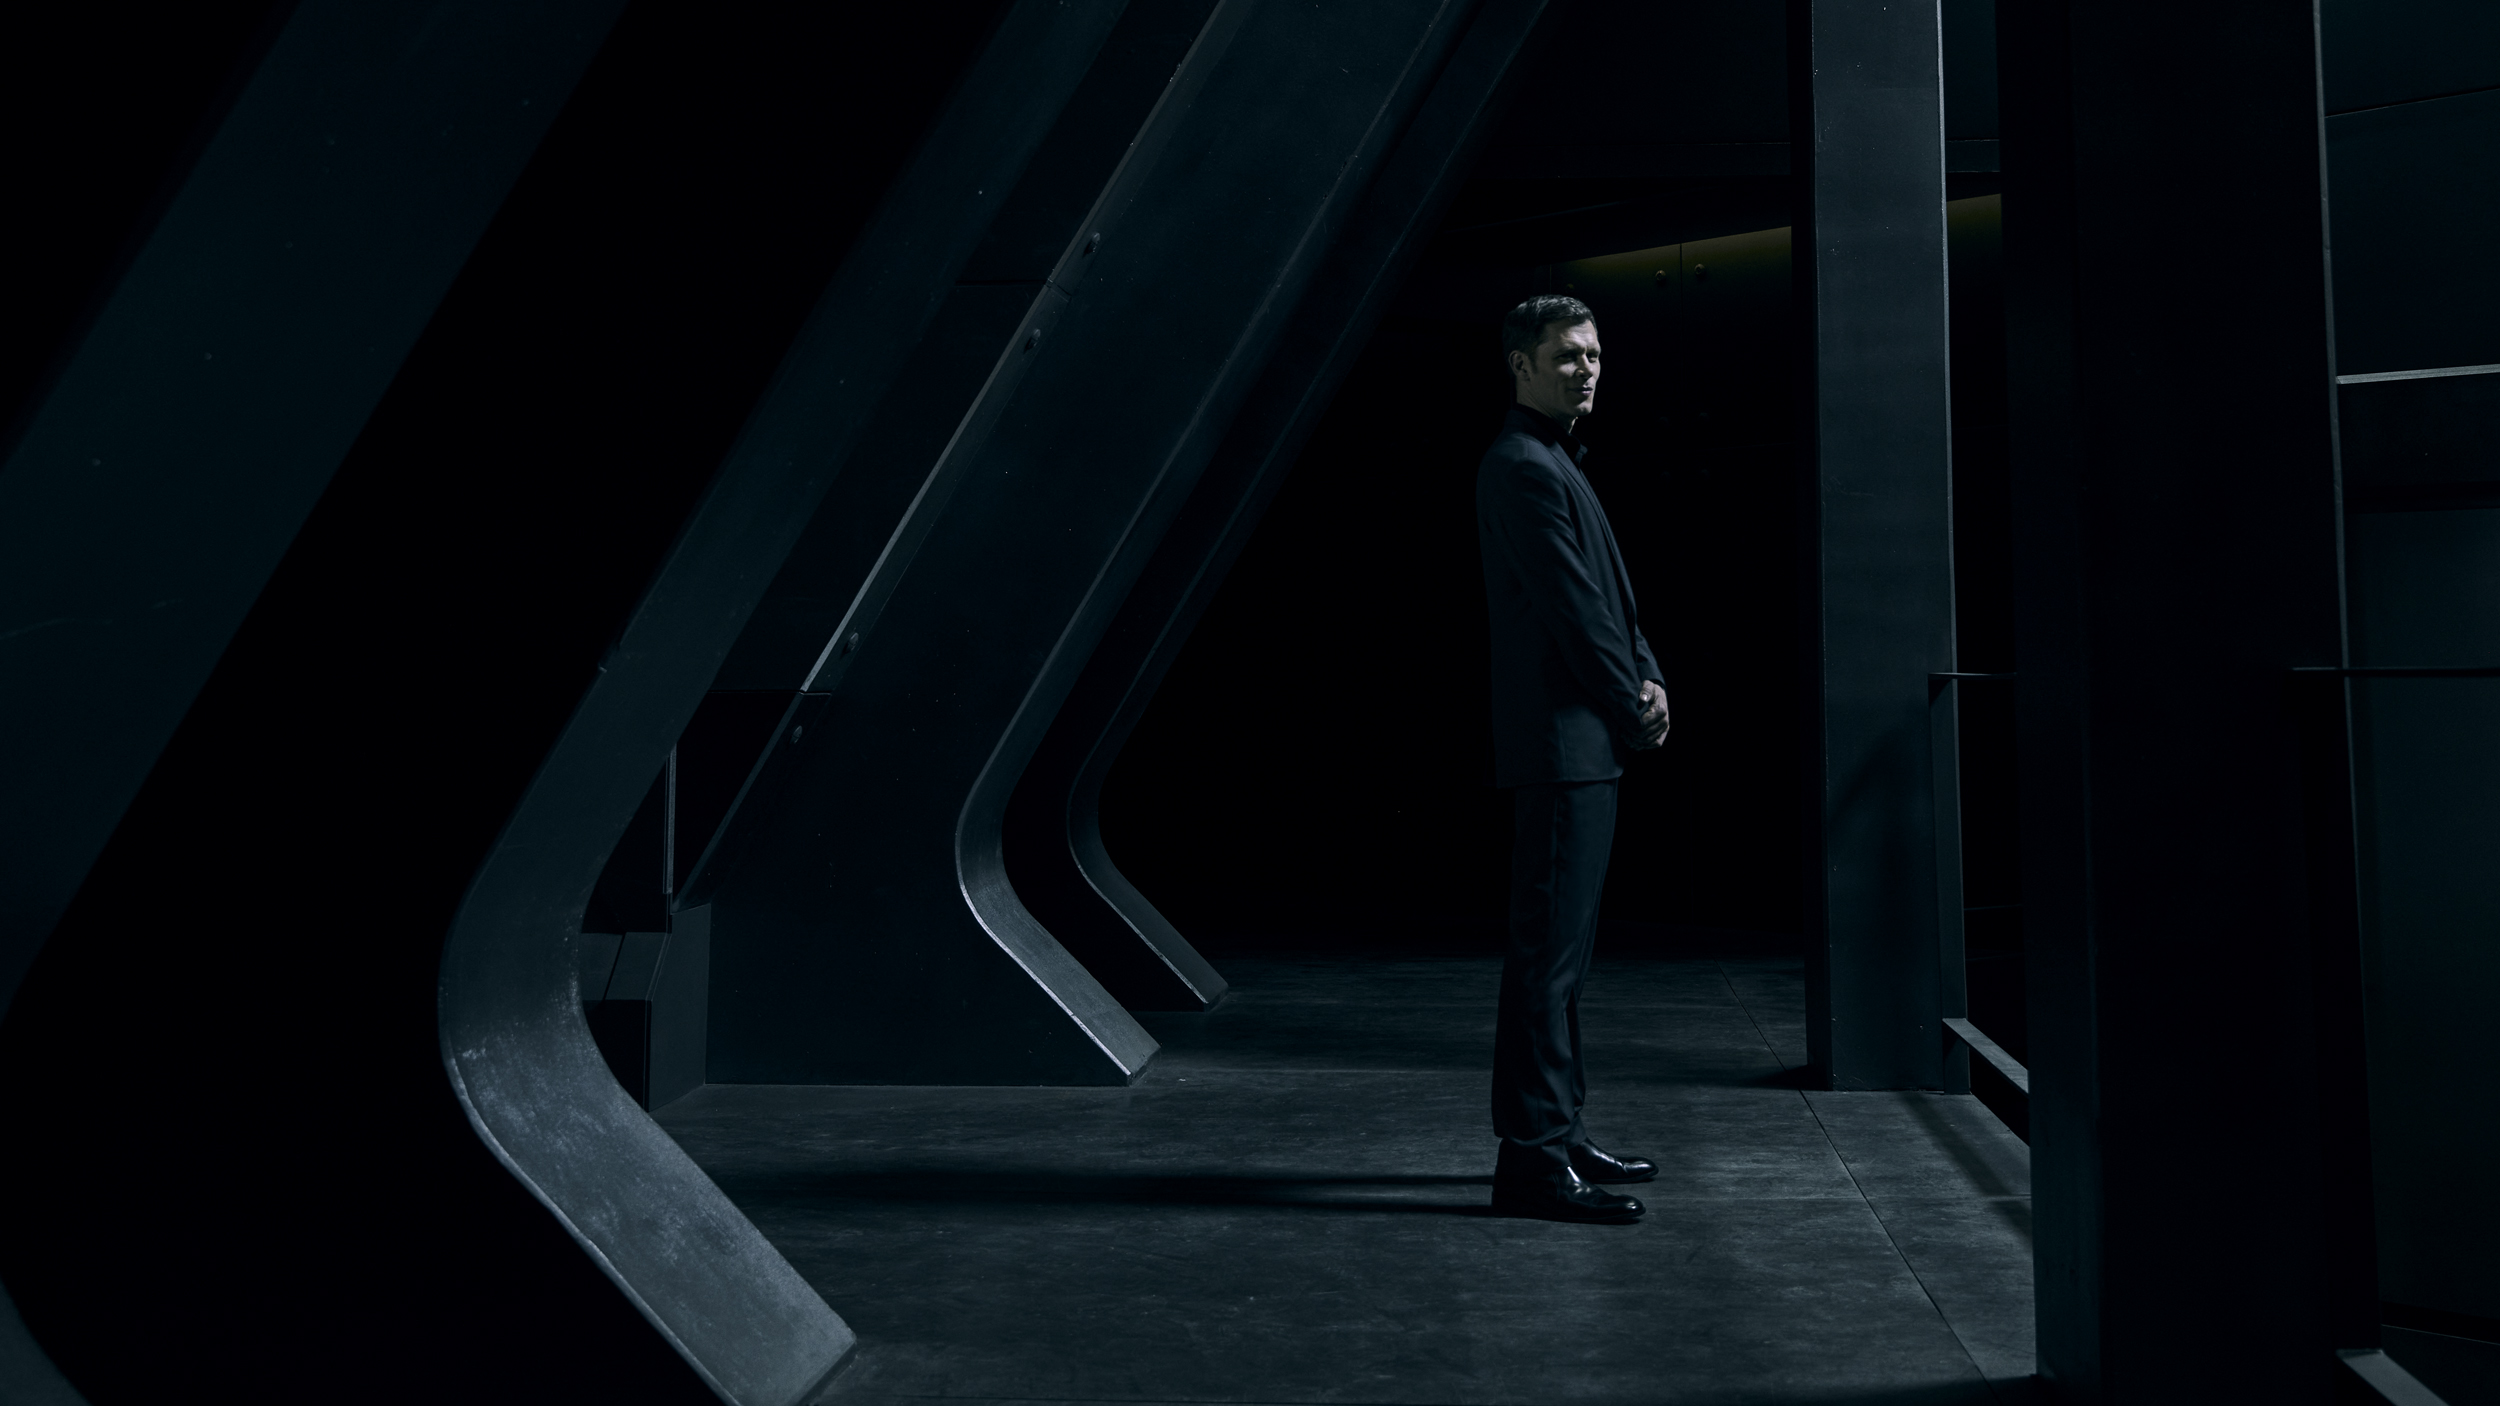 Halo TV series Season 2 image of Joseph Morgan as James Ackerson